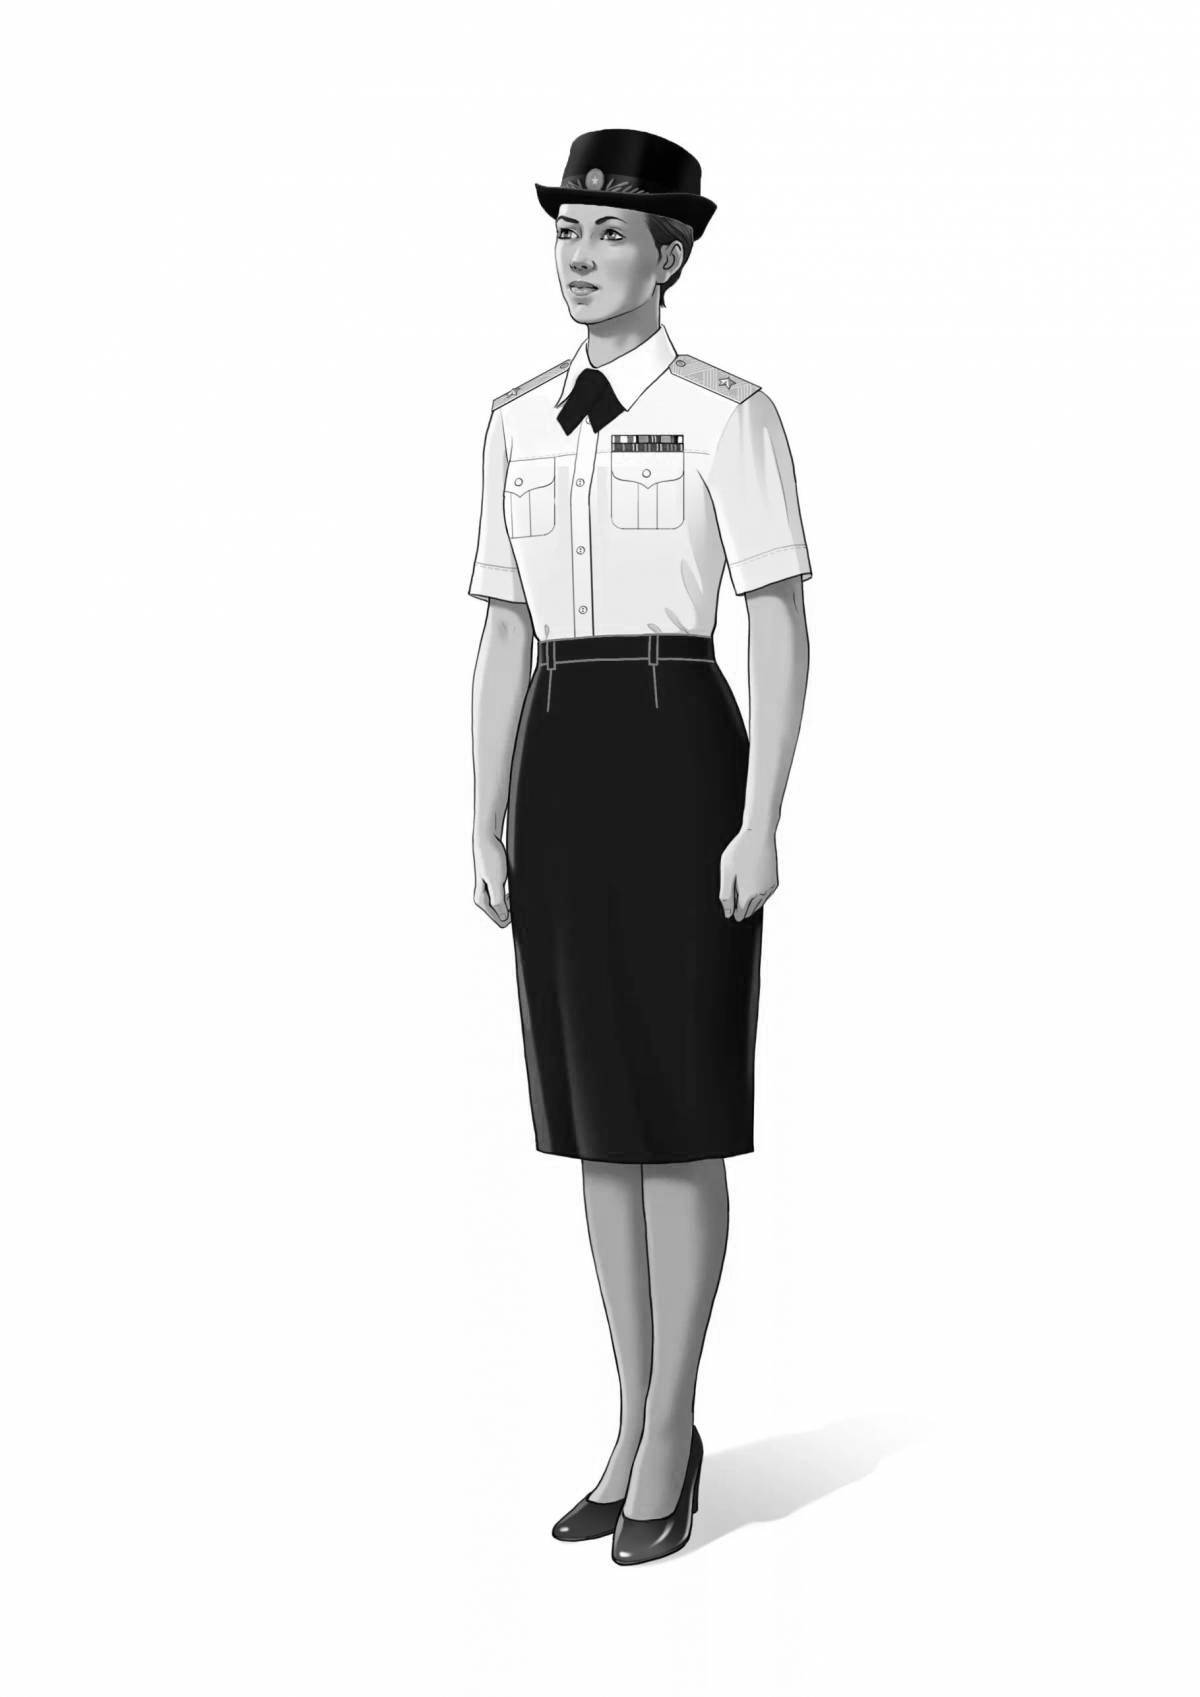 Attractive aircraft maid uniform